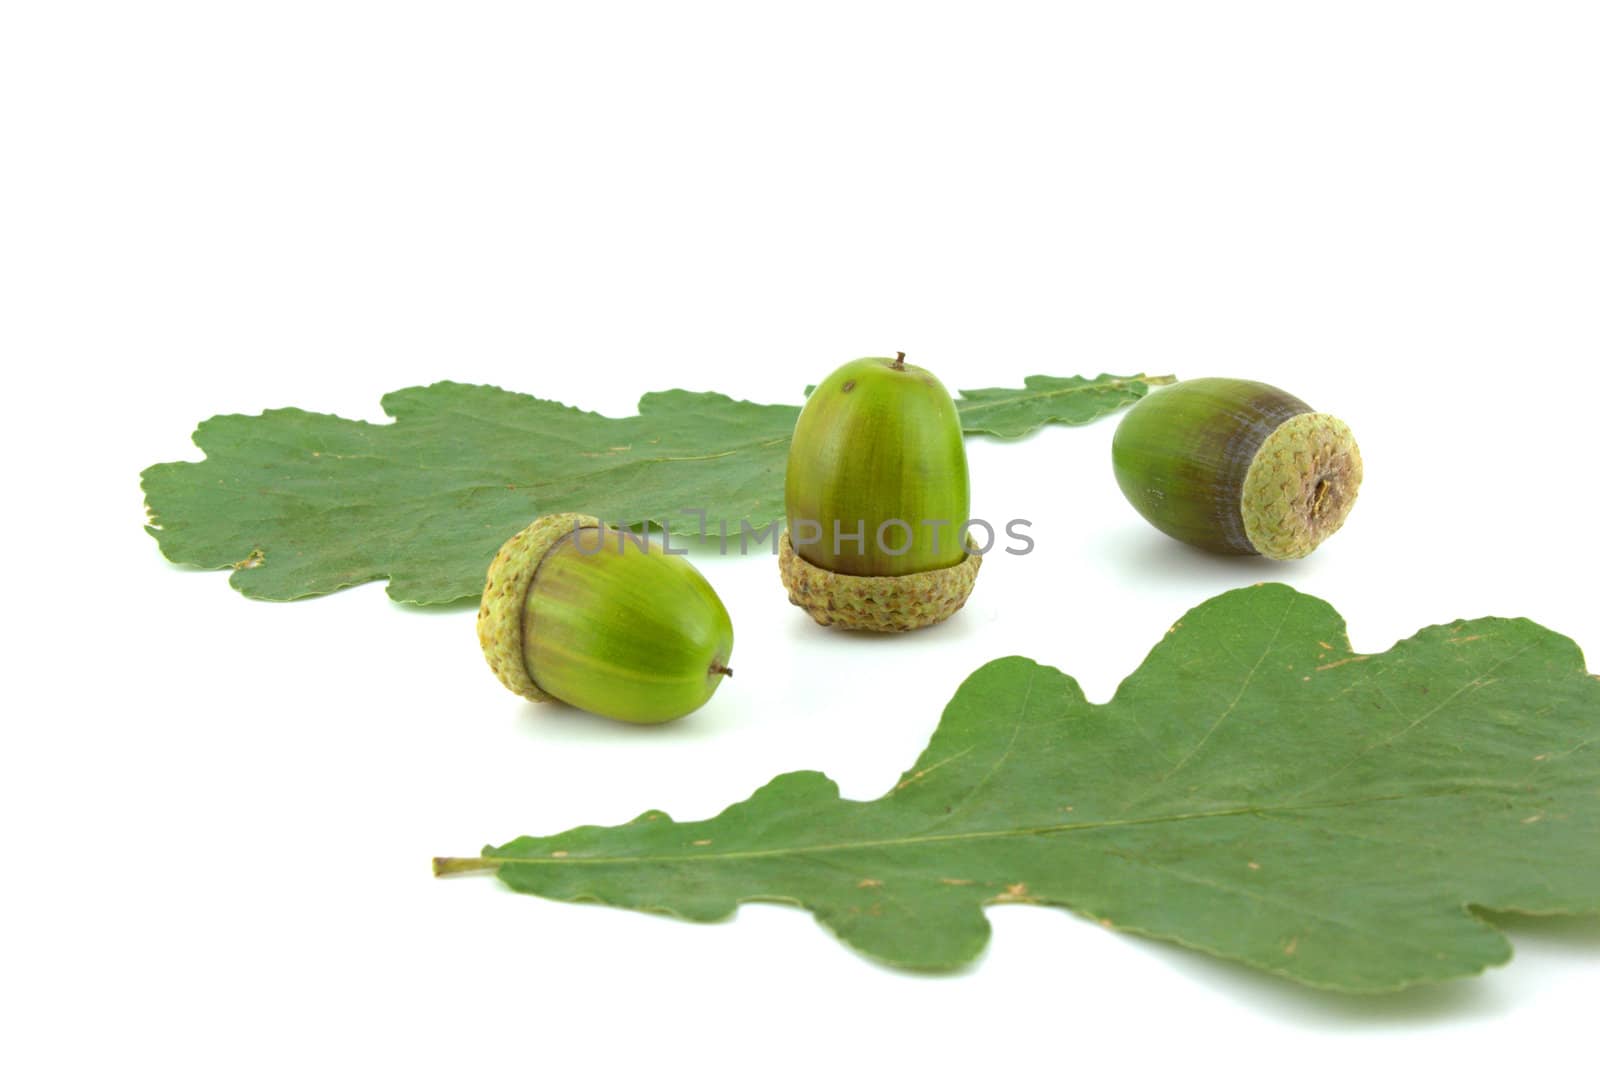 Acorns and leaves of oak by sergpet